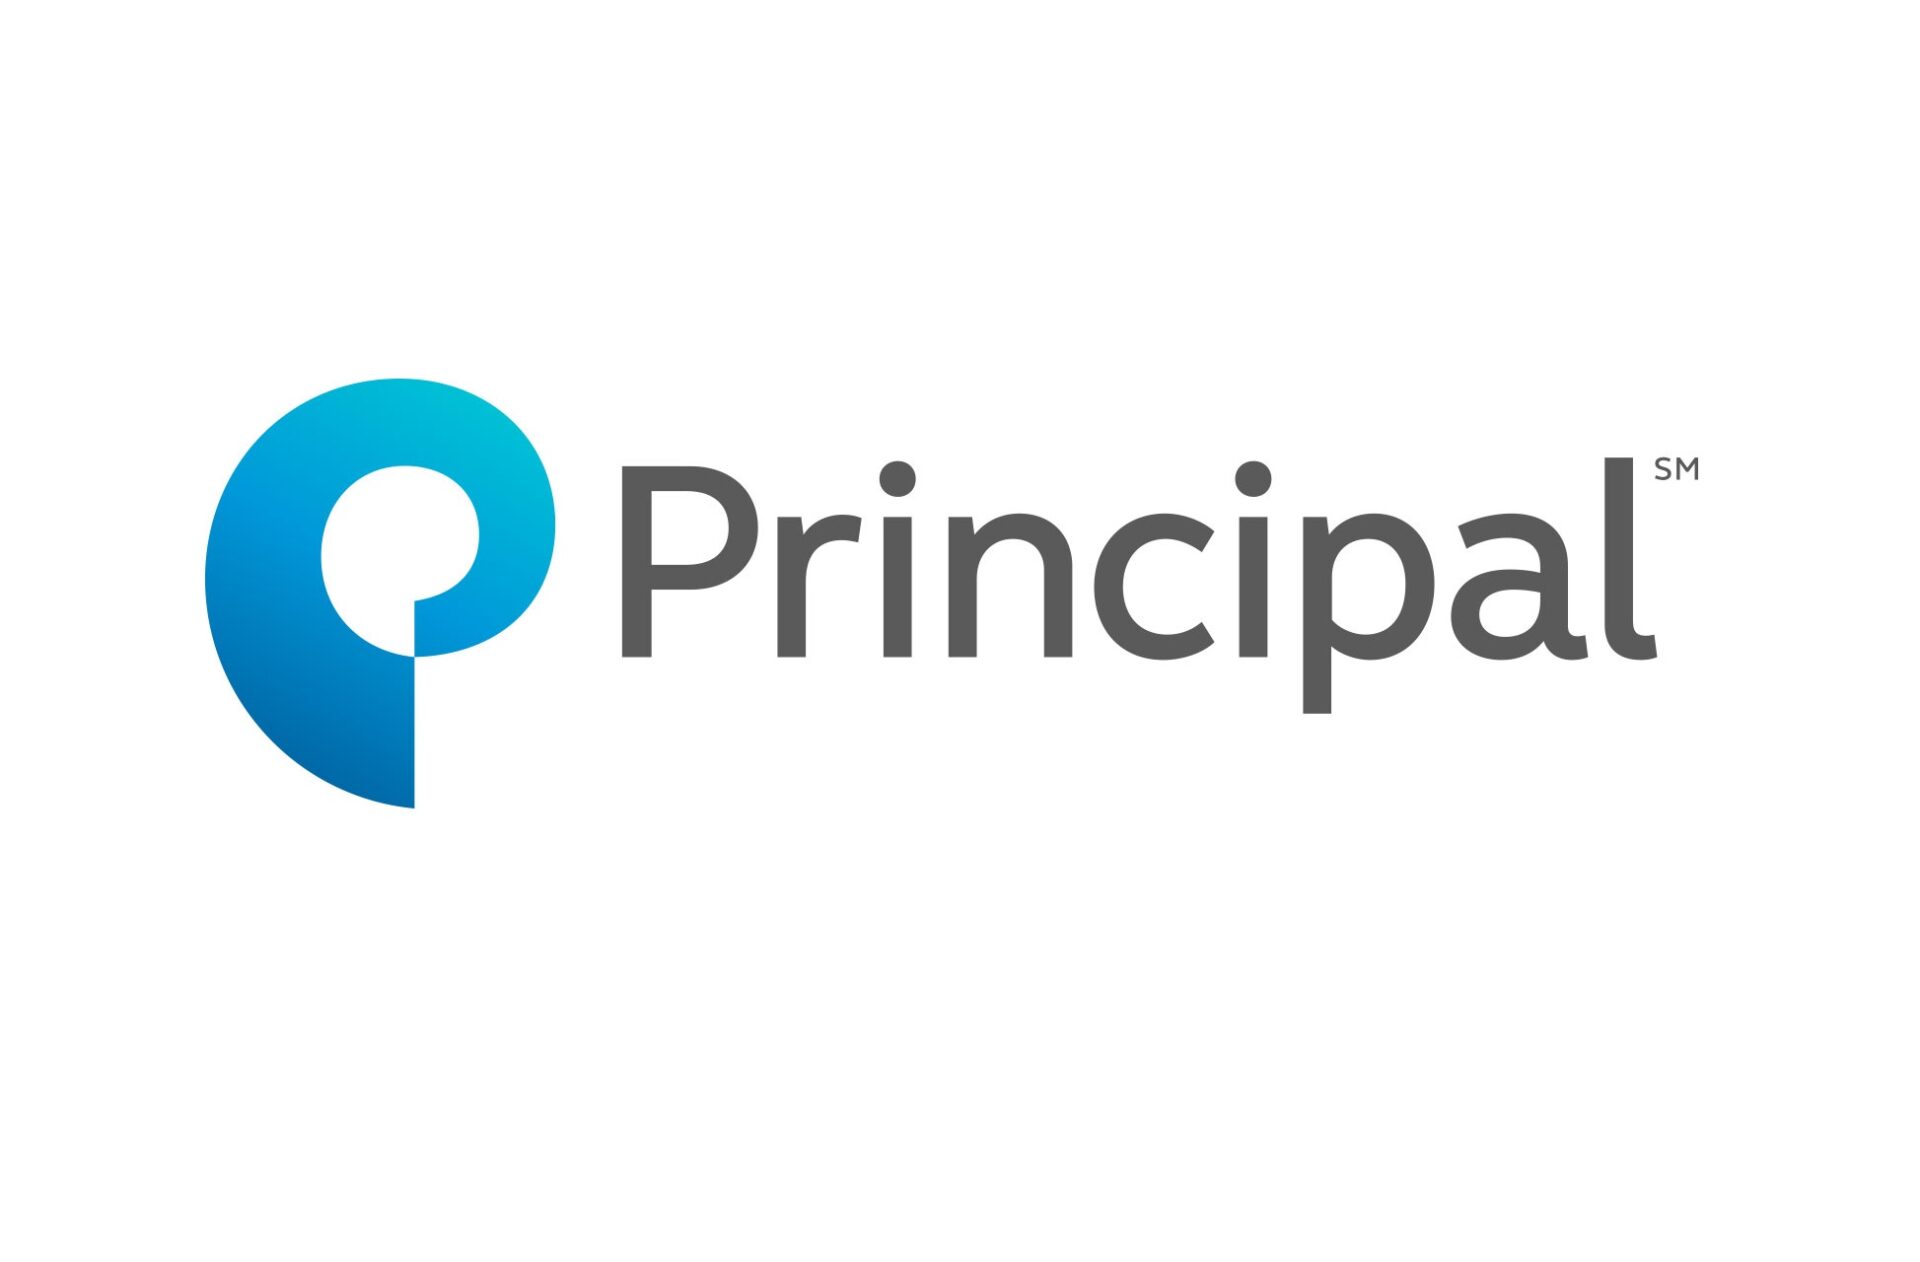 Principal Global Services logo